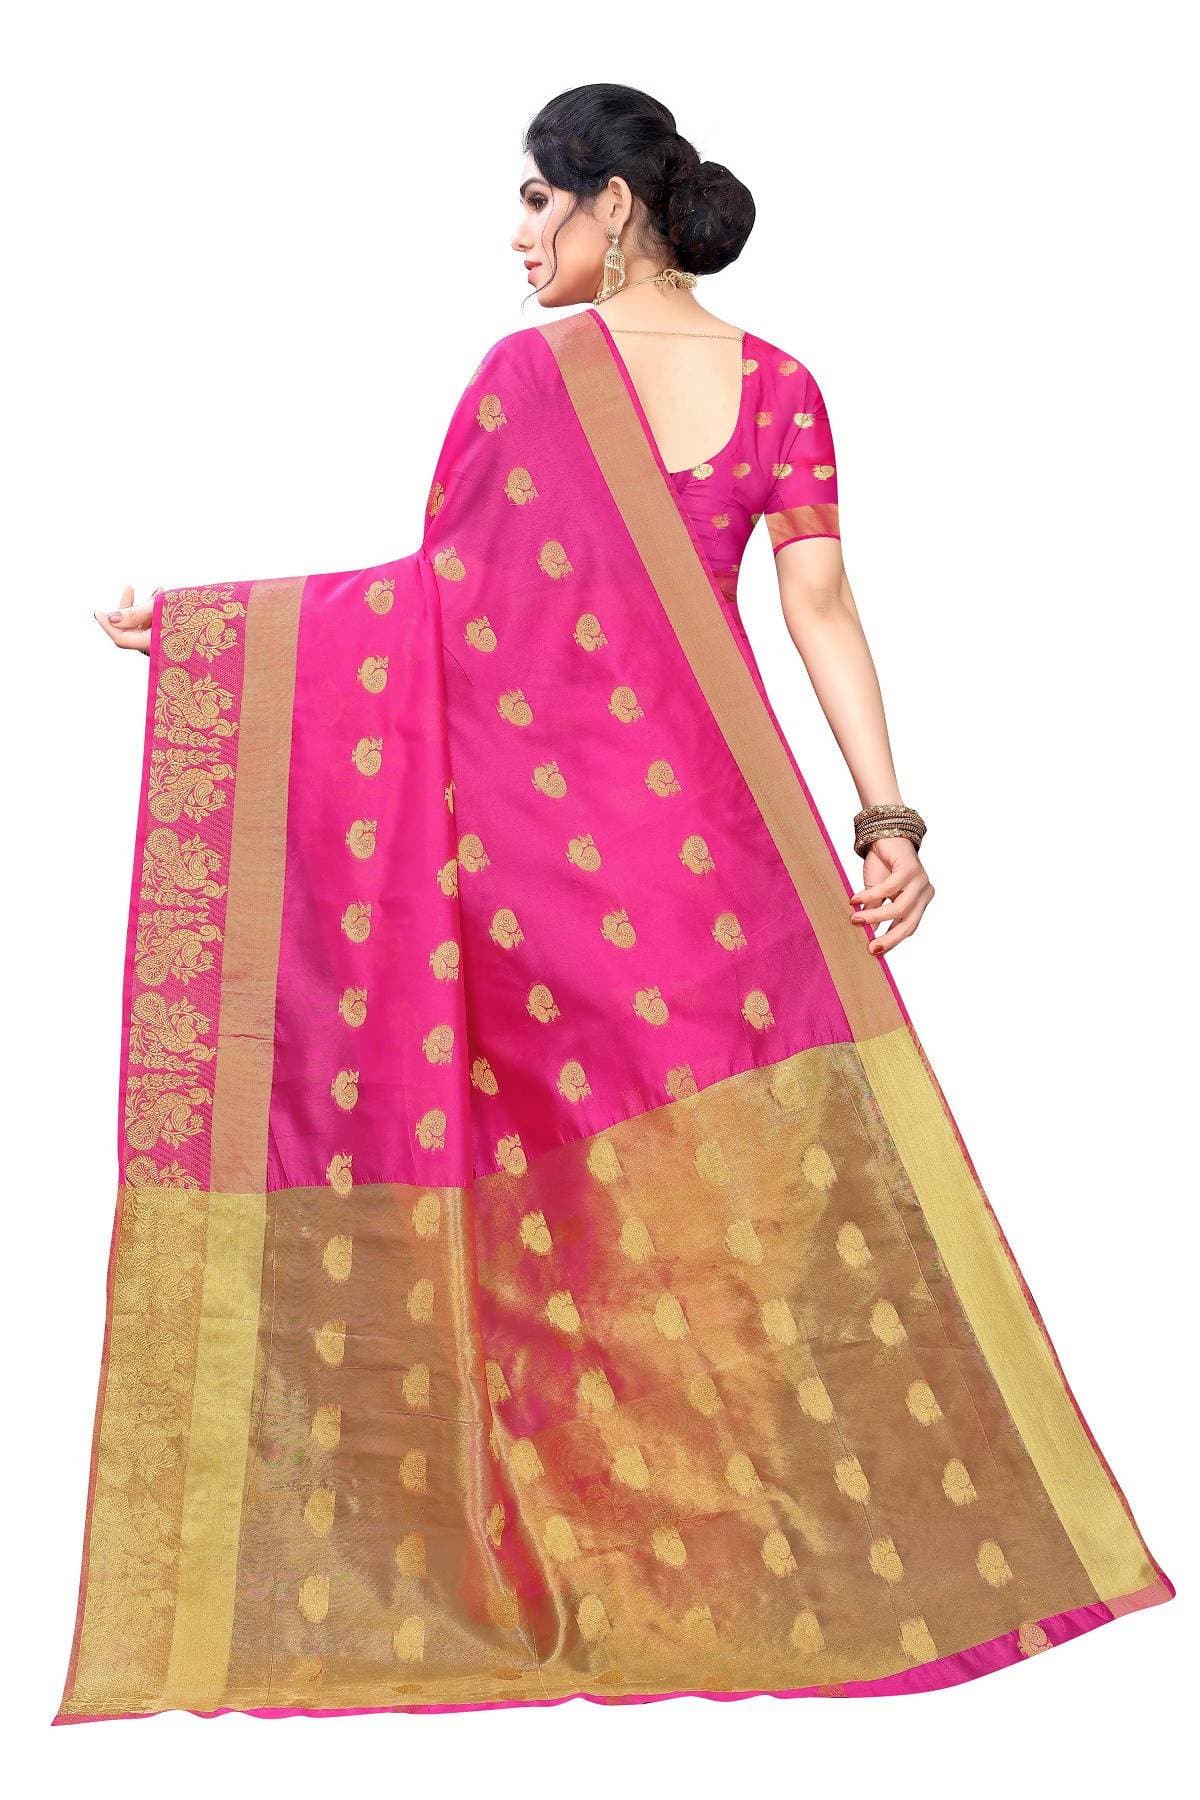 Vamika Banarasi Jacquard Weaving Pink Saree